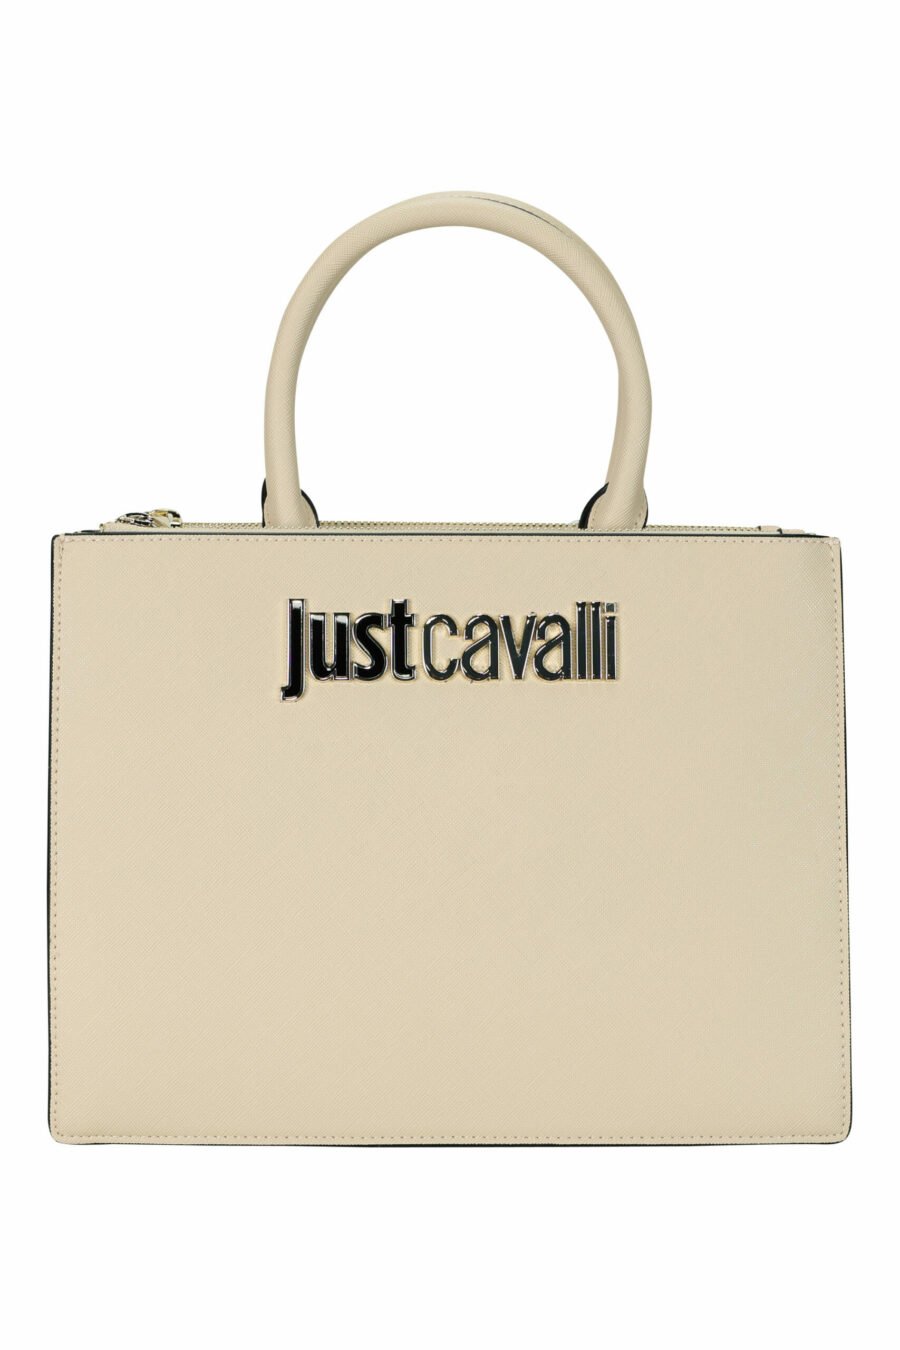 Beige handbag with gold maxilogo lettering - 8052672733894 scaled